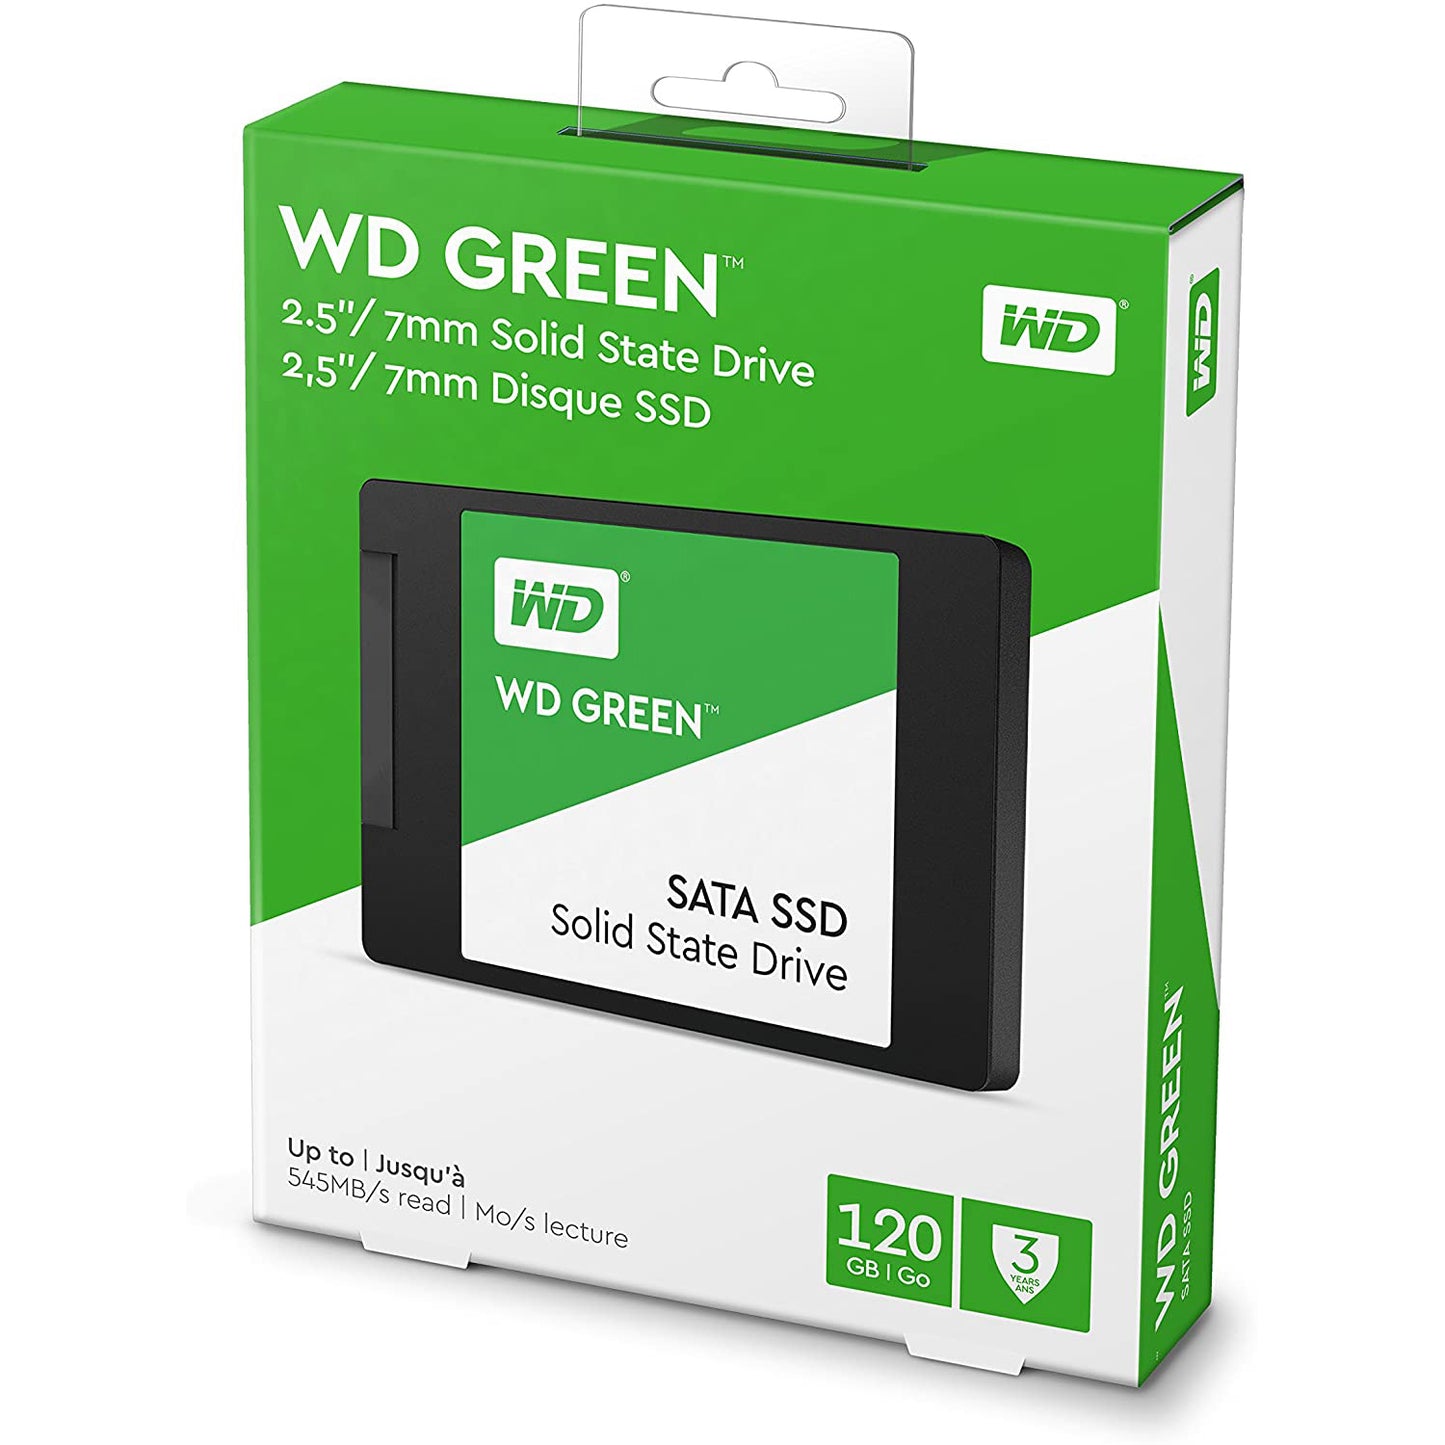 WD Green 120GB 2.5" SATA SSD/Solid State Drive